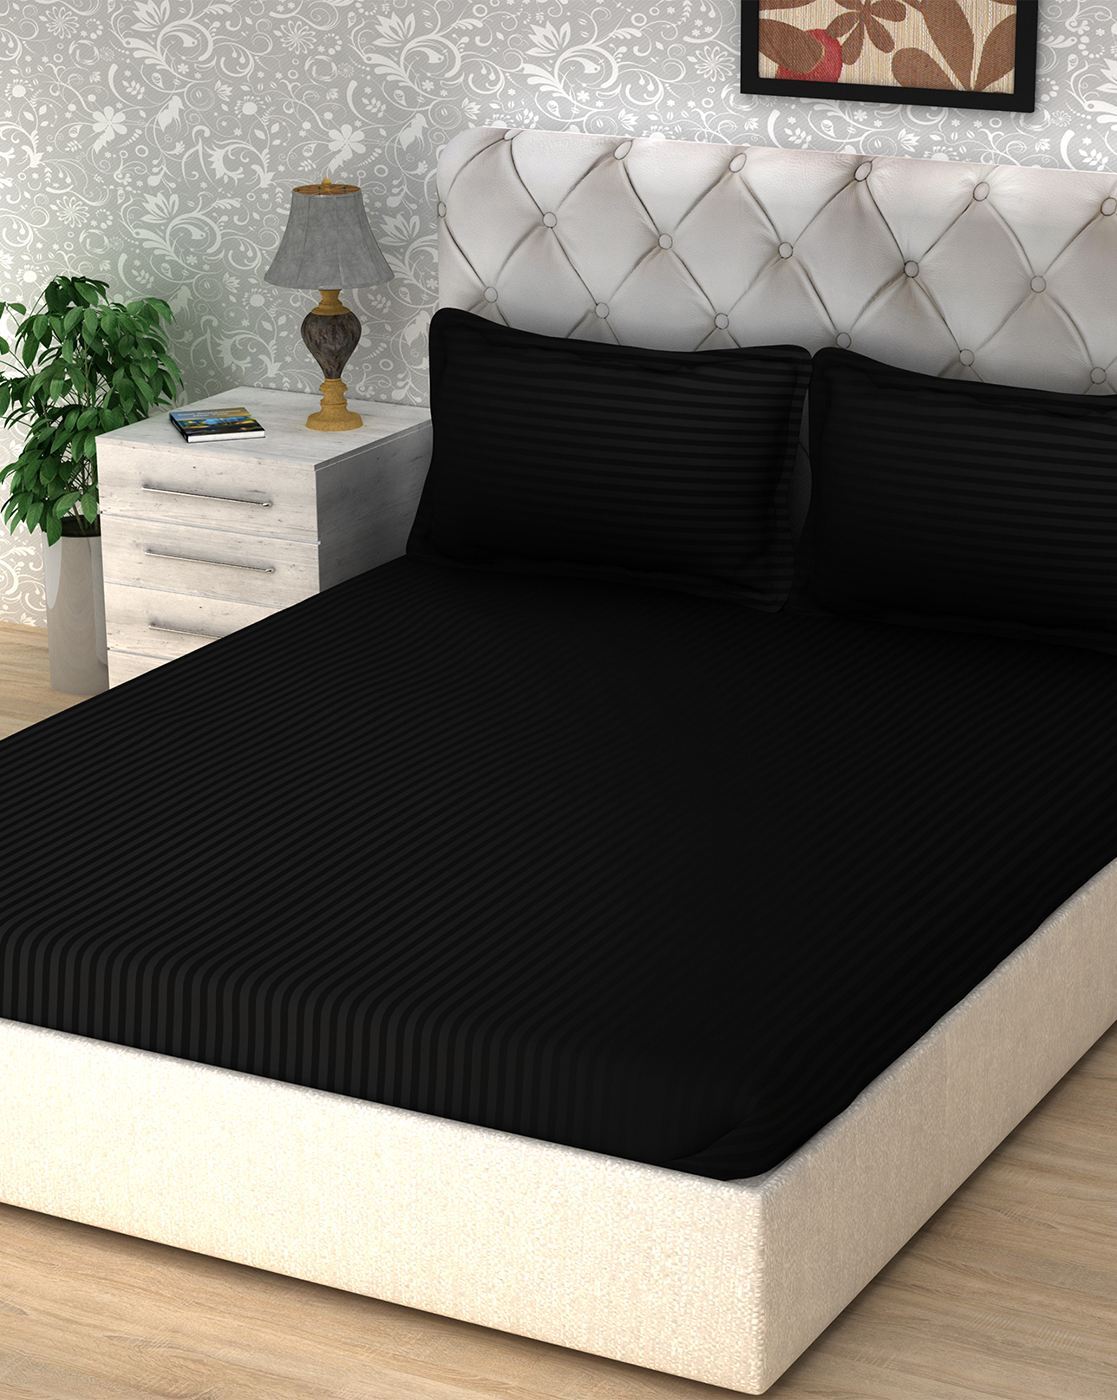 Black Bedsheets For Home Kitchen, King Size Bed Sheet Size